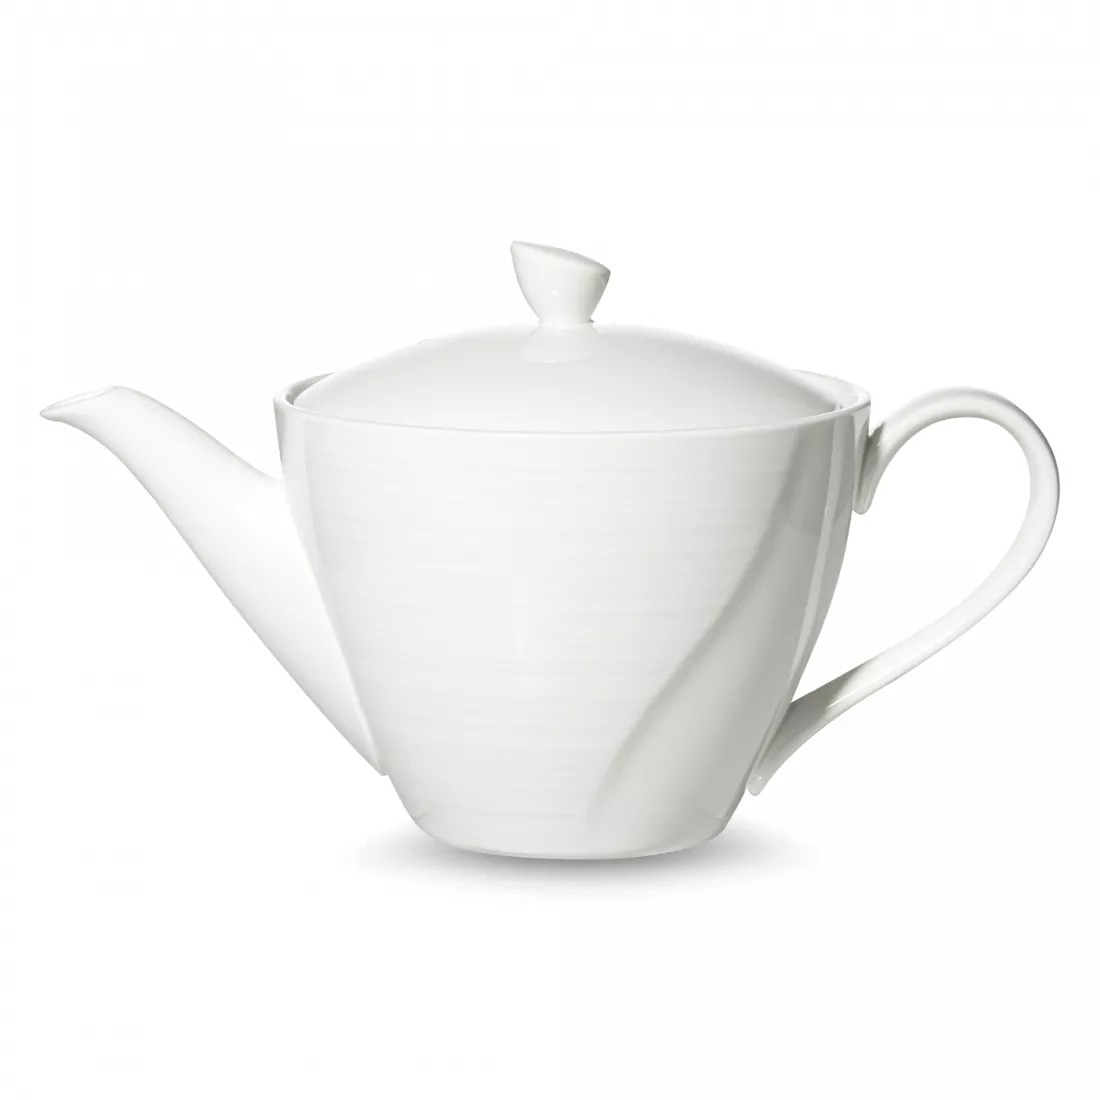 Чайник Narumi Воздушный белый 1,27 л чайник narumi великолепие 950 мл